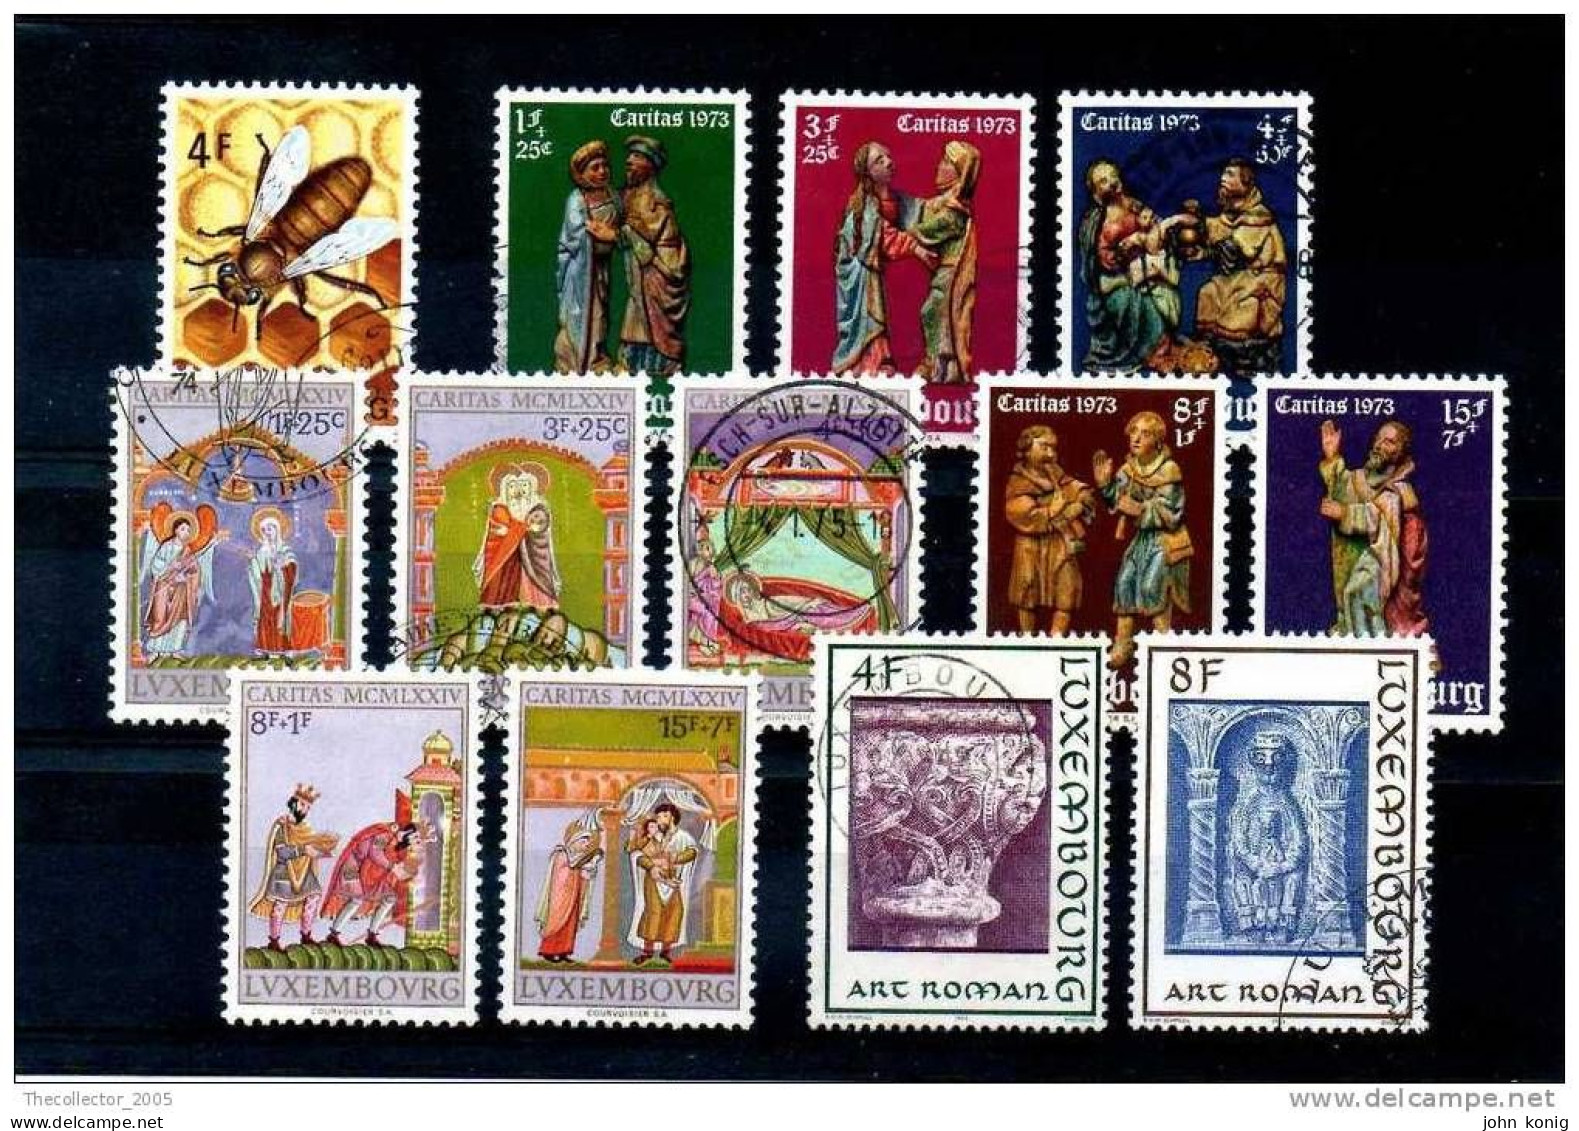 LUSSEMBURGO - LUXEMBOURG - Lotto Francobolli Usati - Lot Of Used Stamps - Sammlungen